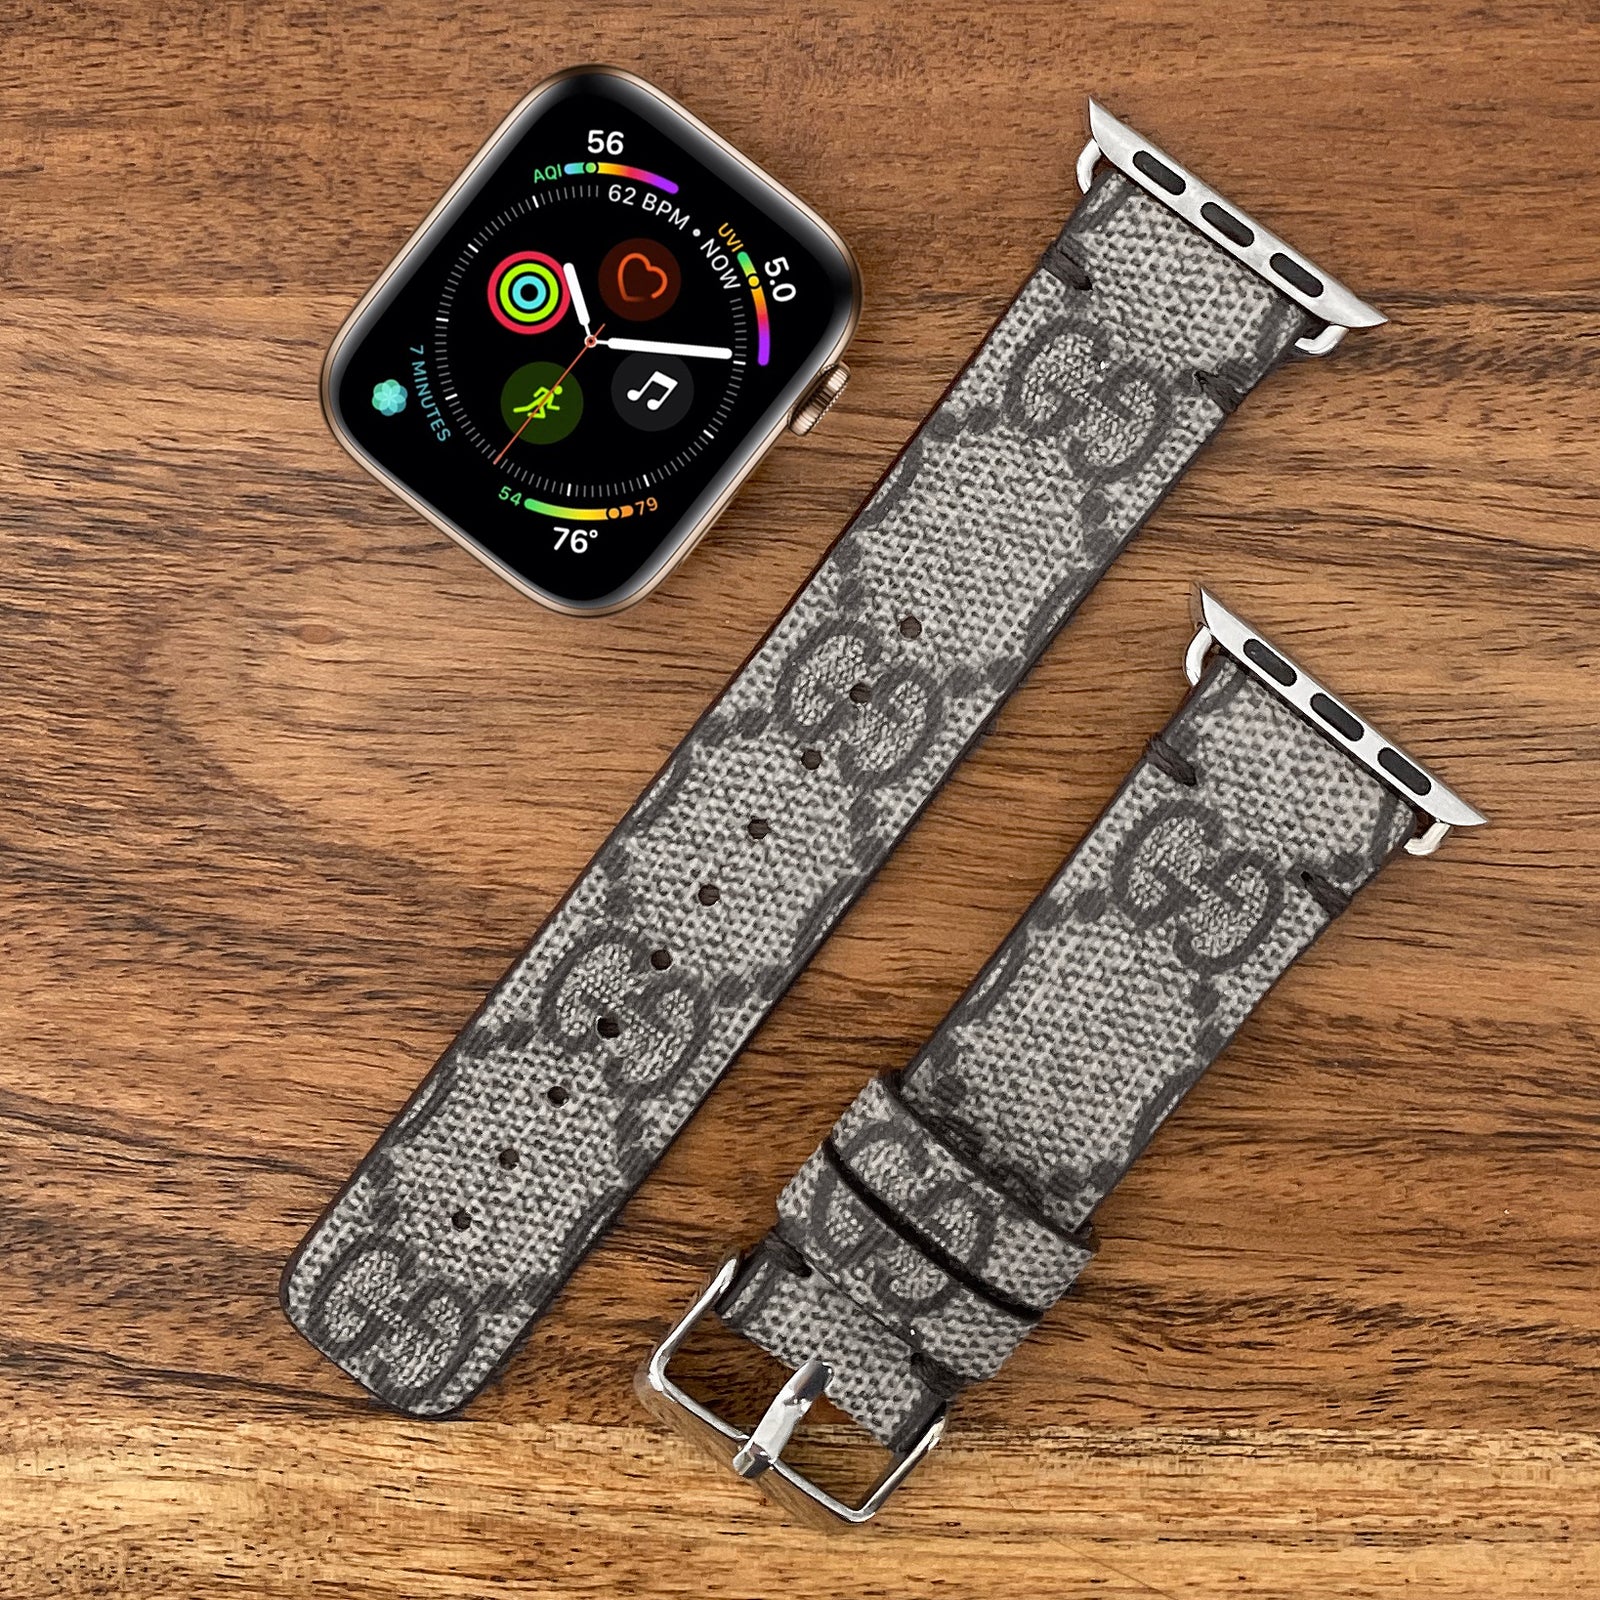 Apple Watch Band Repurposed Classic-LV Brown Luxury Brand